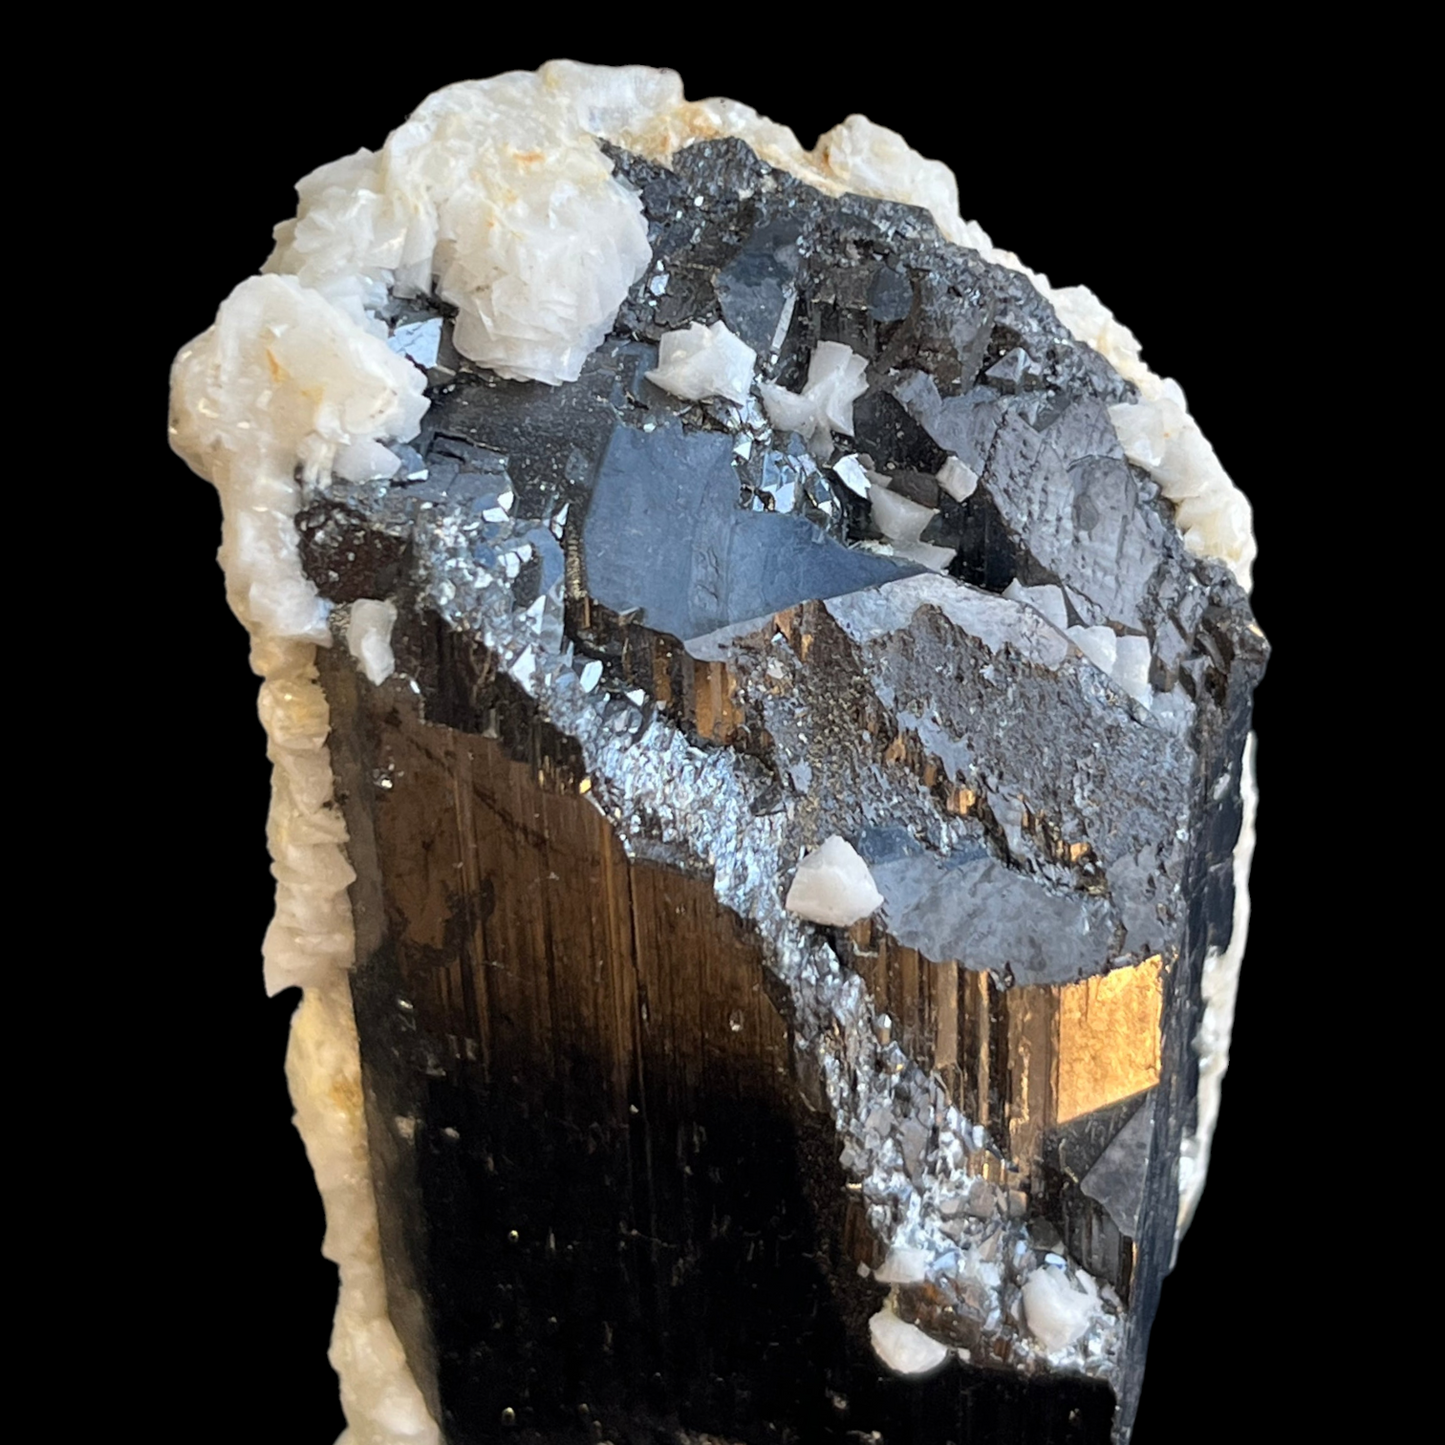 Ferberite calcite Portugal PNQ9